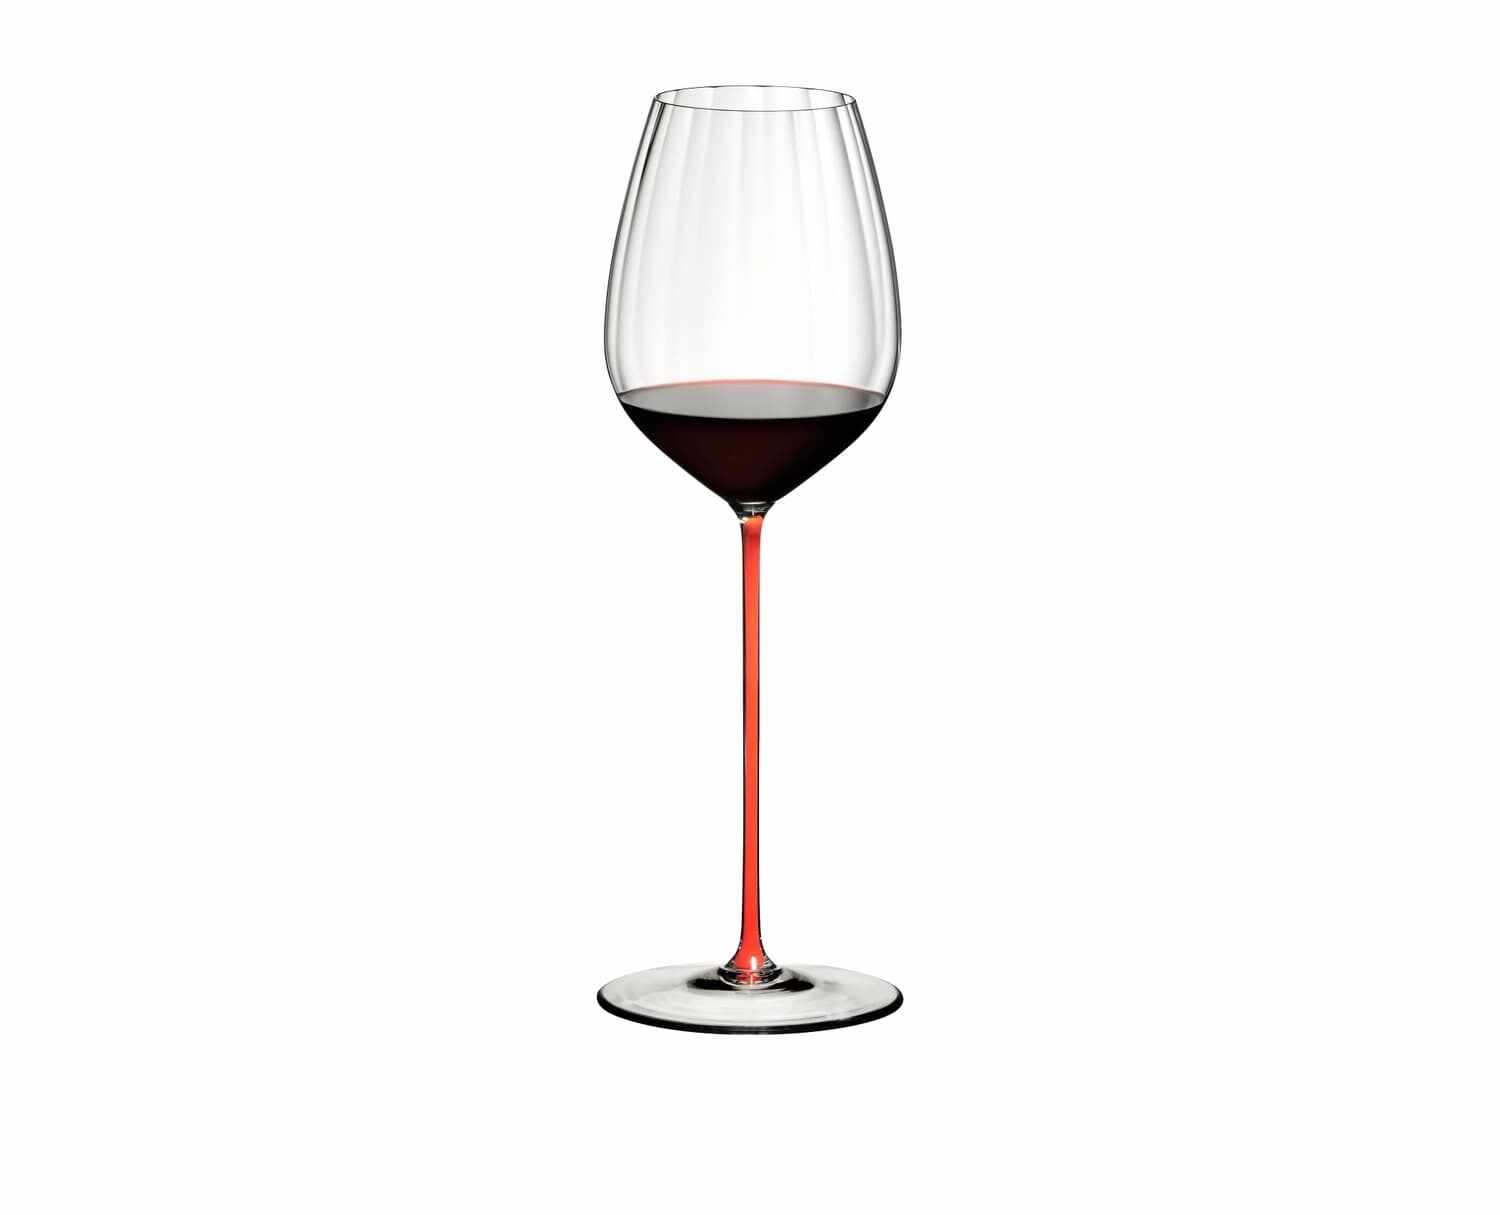 Pahar pentru vin, din cristal High Performance Cabernet Rosu, 834 ml, Riedel